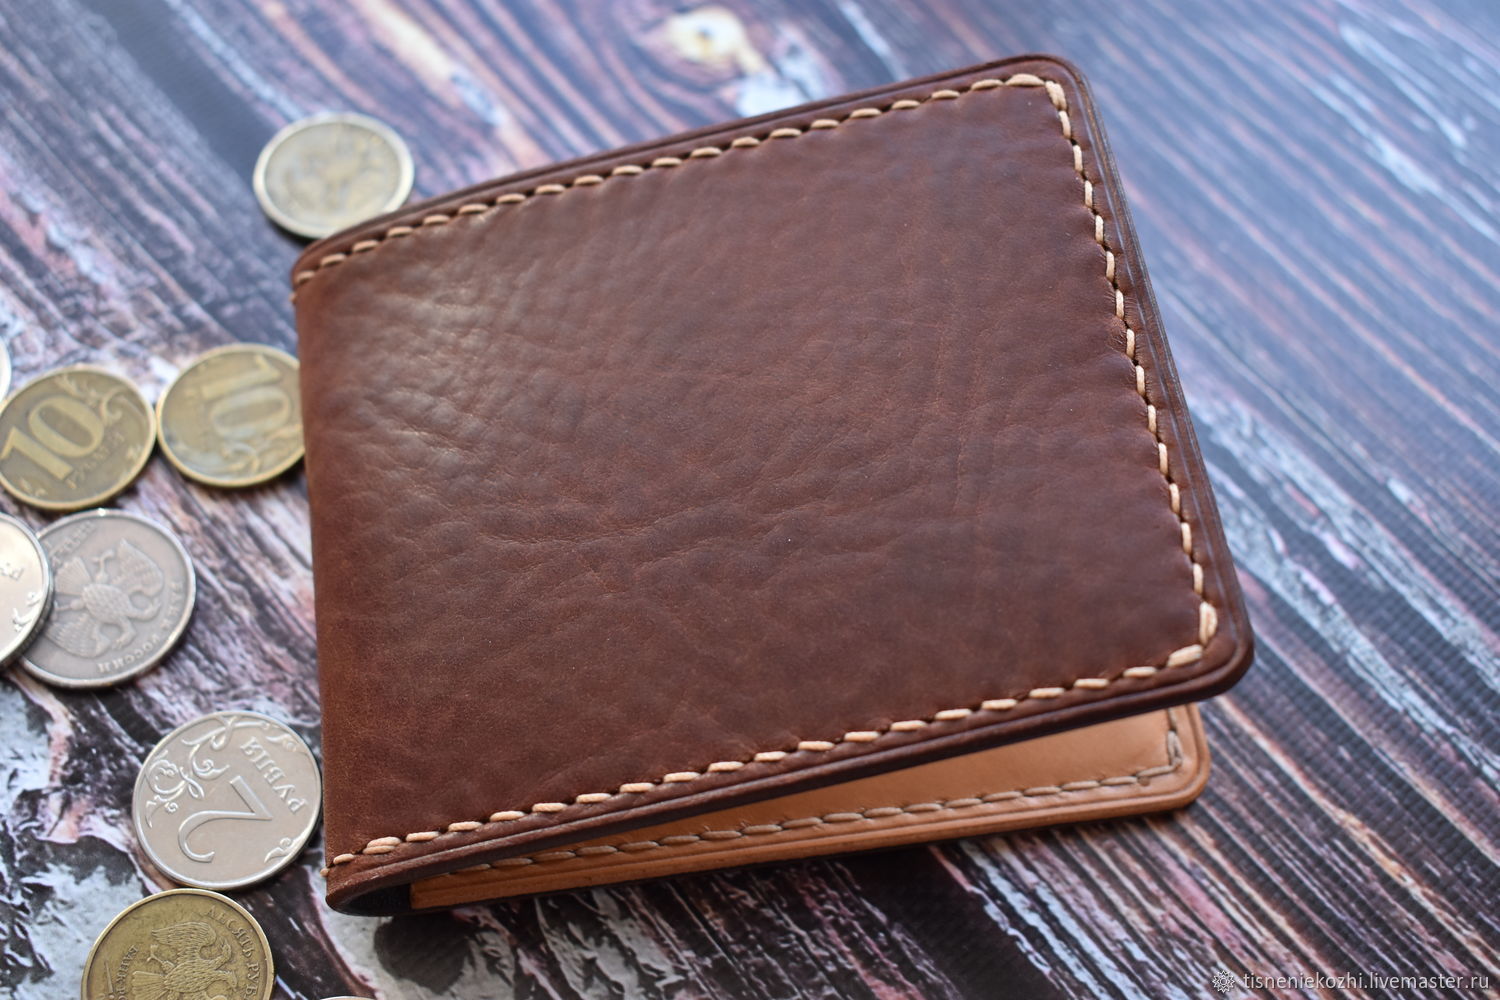 Leather wallet ' Litl1', Wallets, Orenburg,  Фото №1